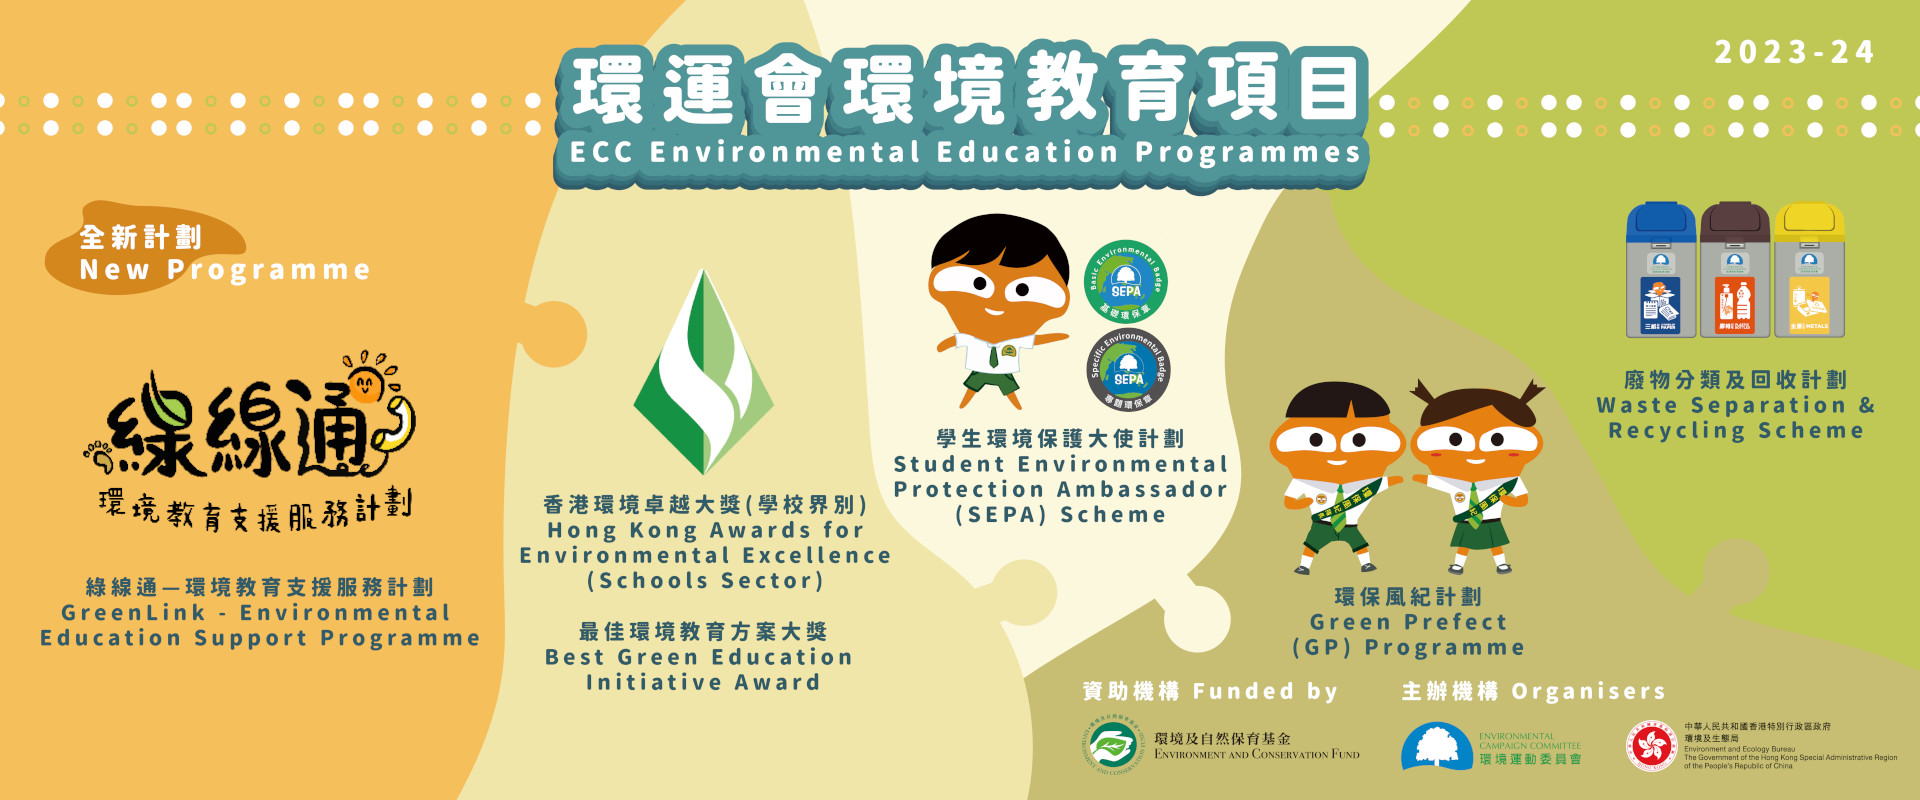 ECC Environmental Education Programme